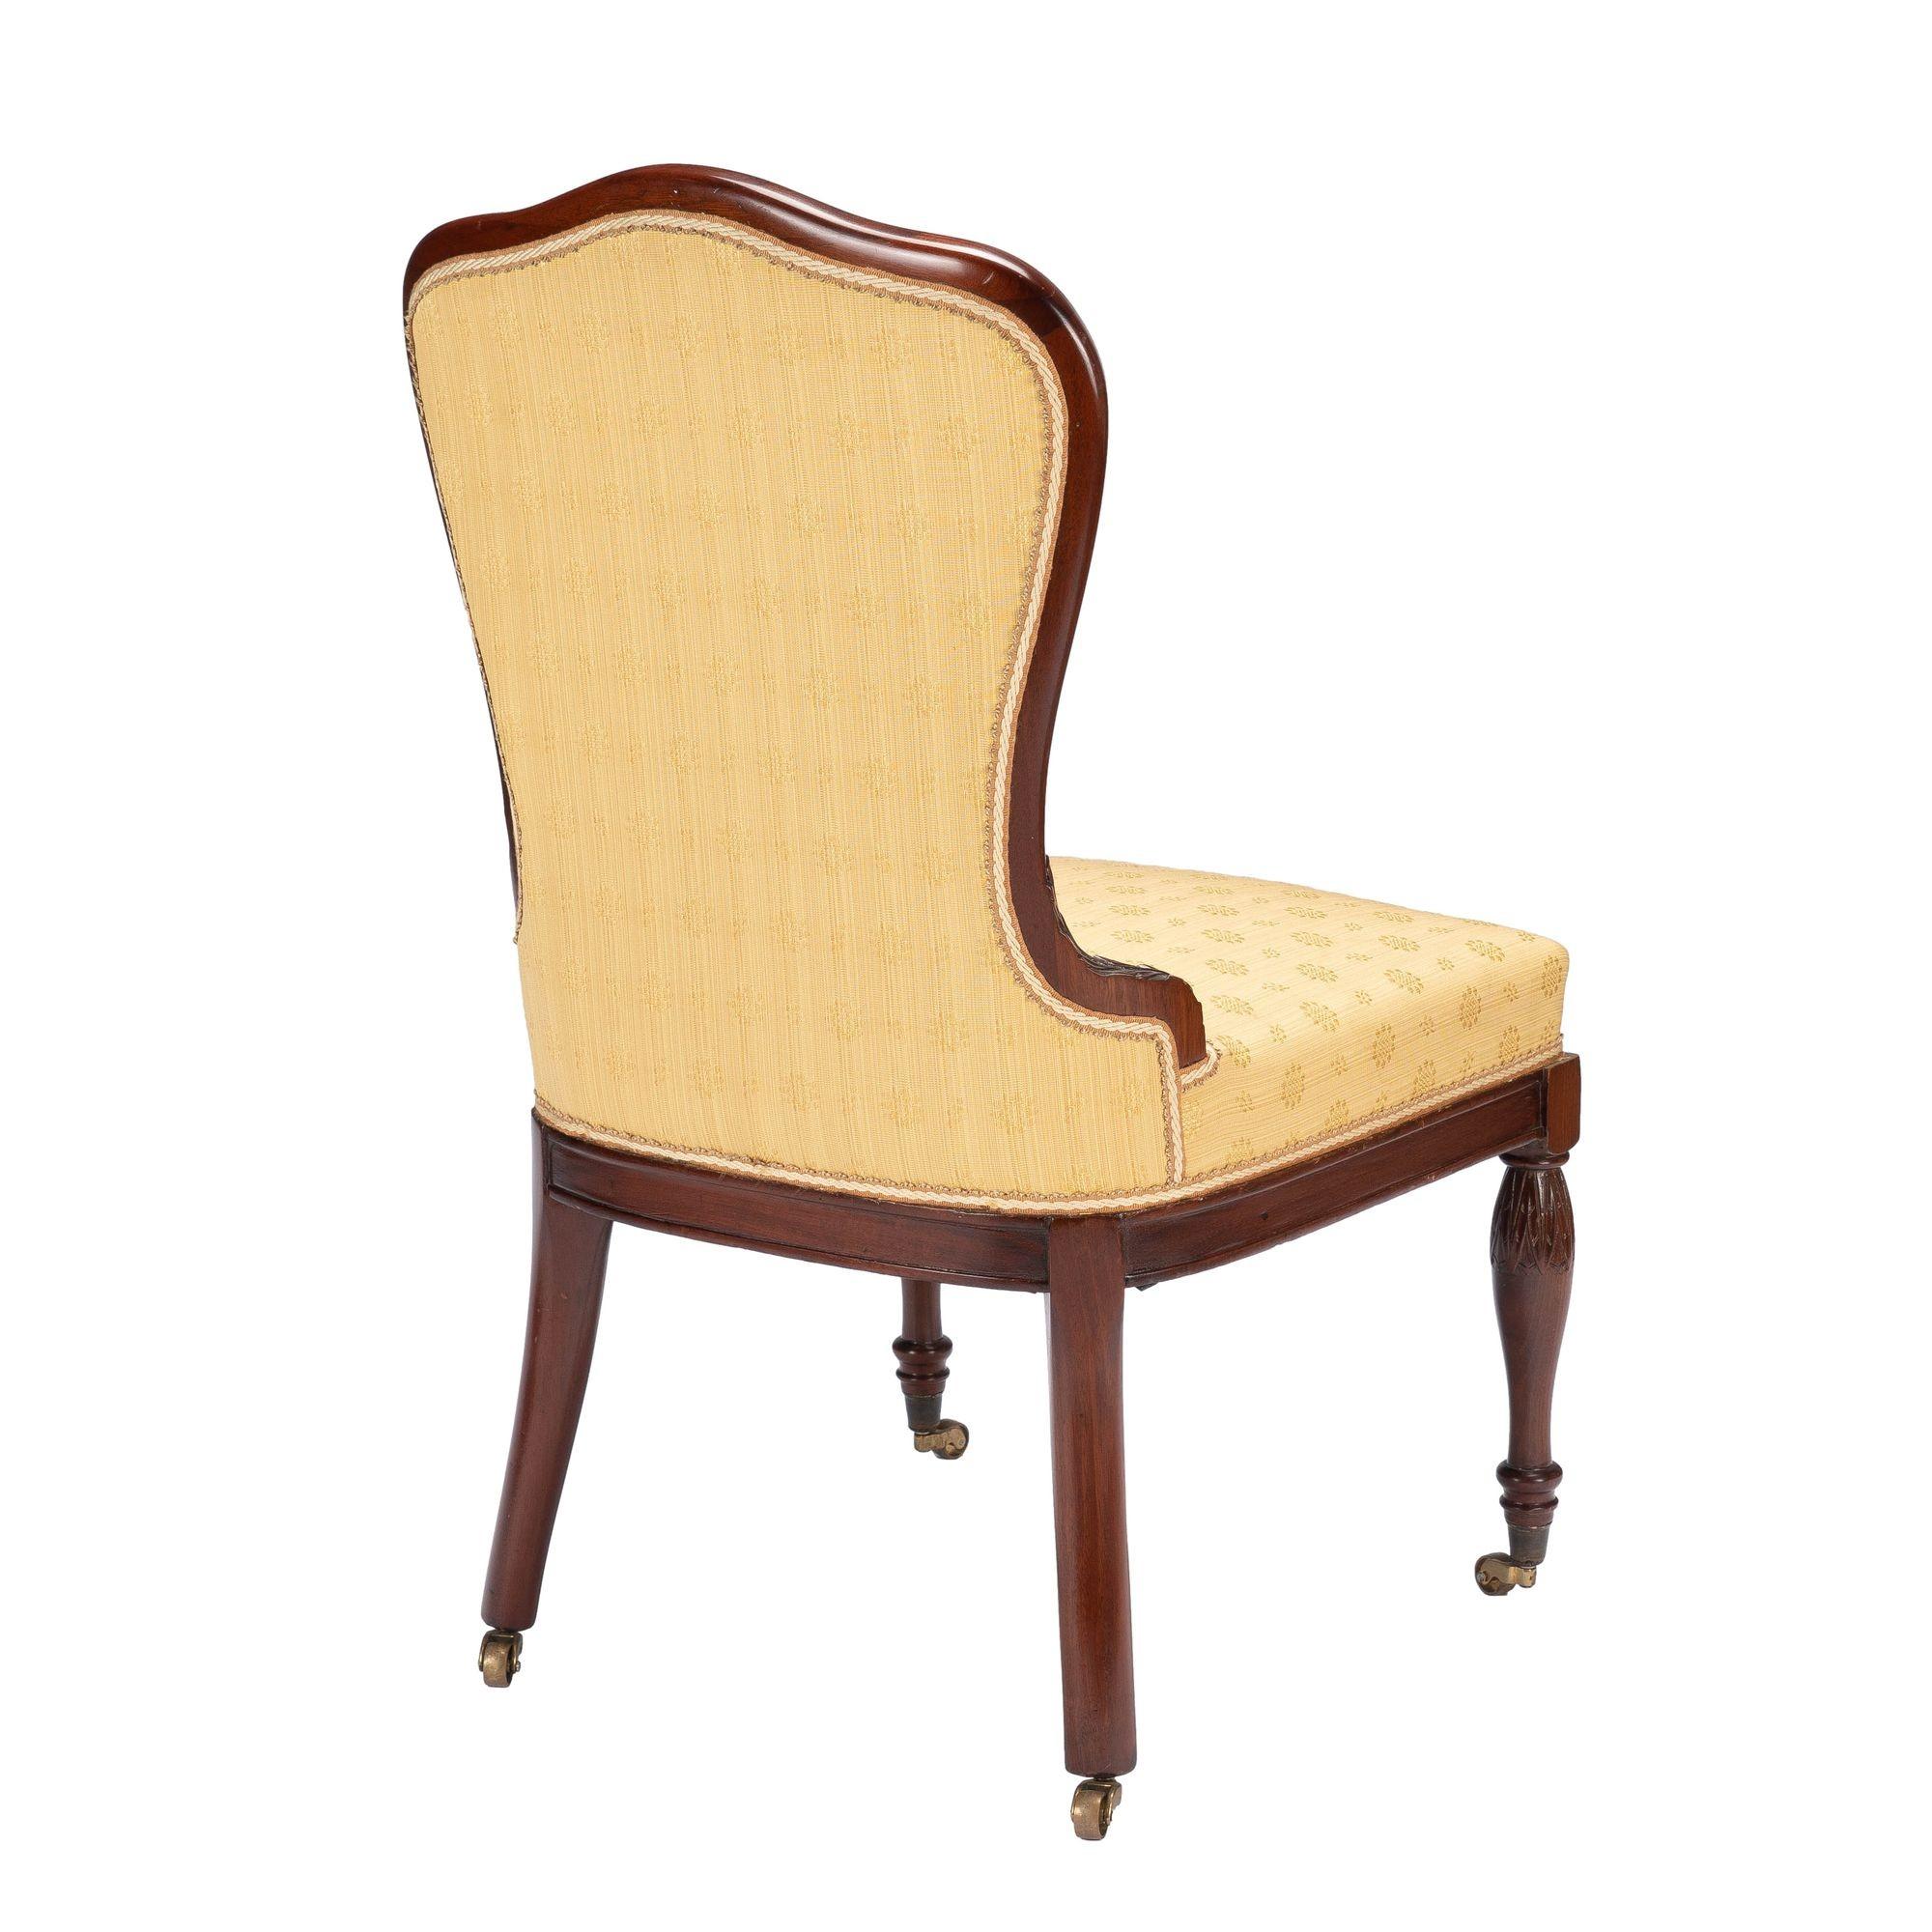 19th Century Baltimore Louis XVI Revival Upholstered Slipper Chair, '1850-75' For Sale